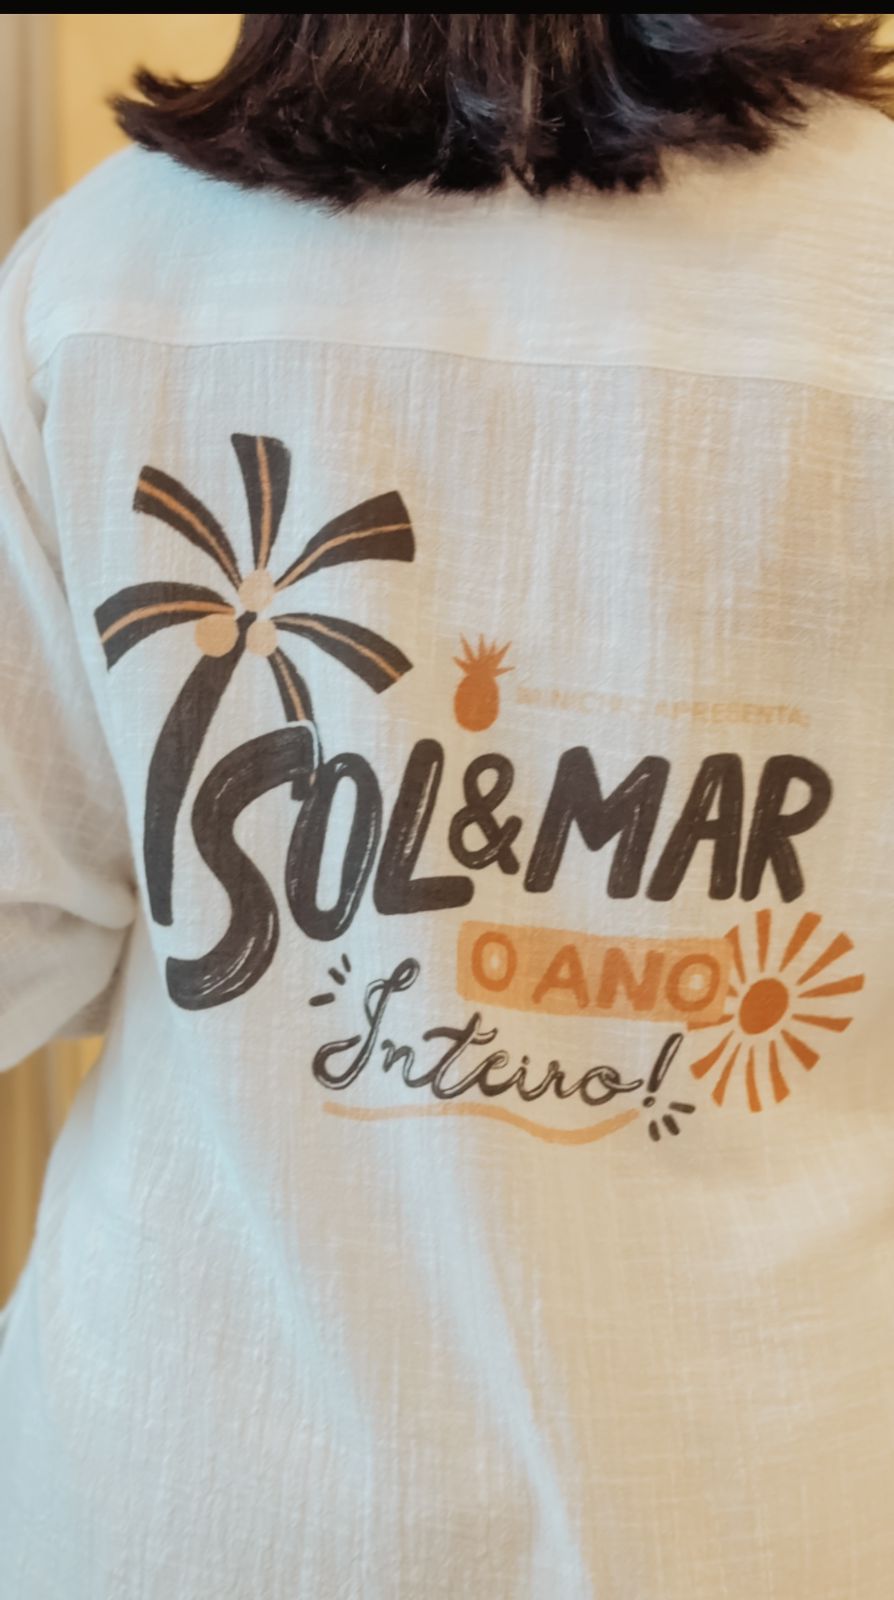 chemise mafeh - sol & mar